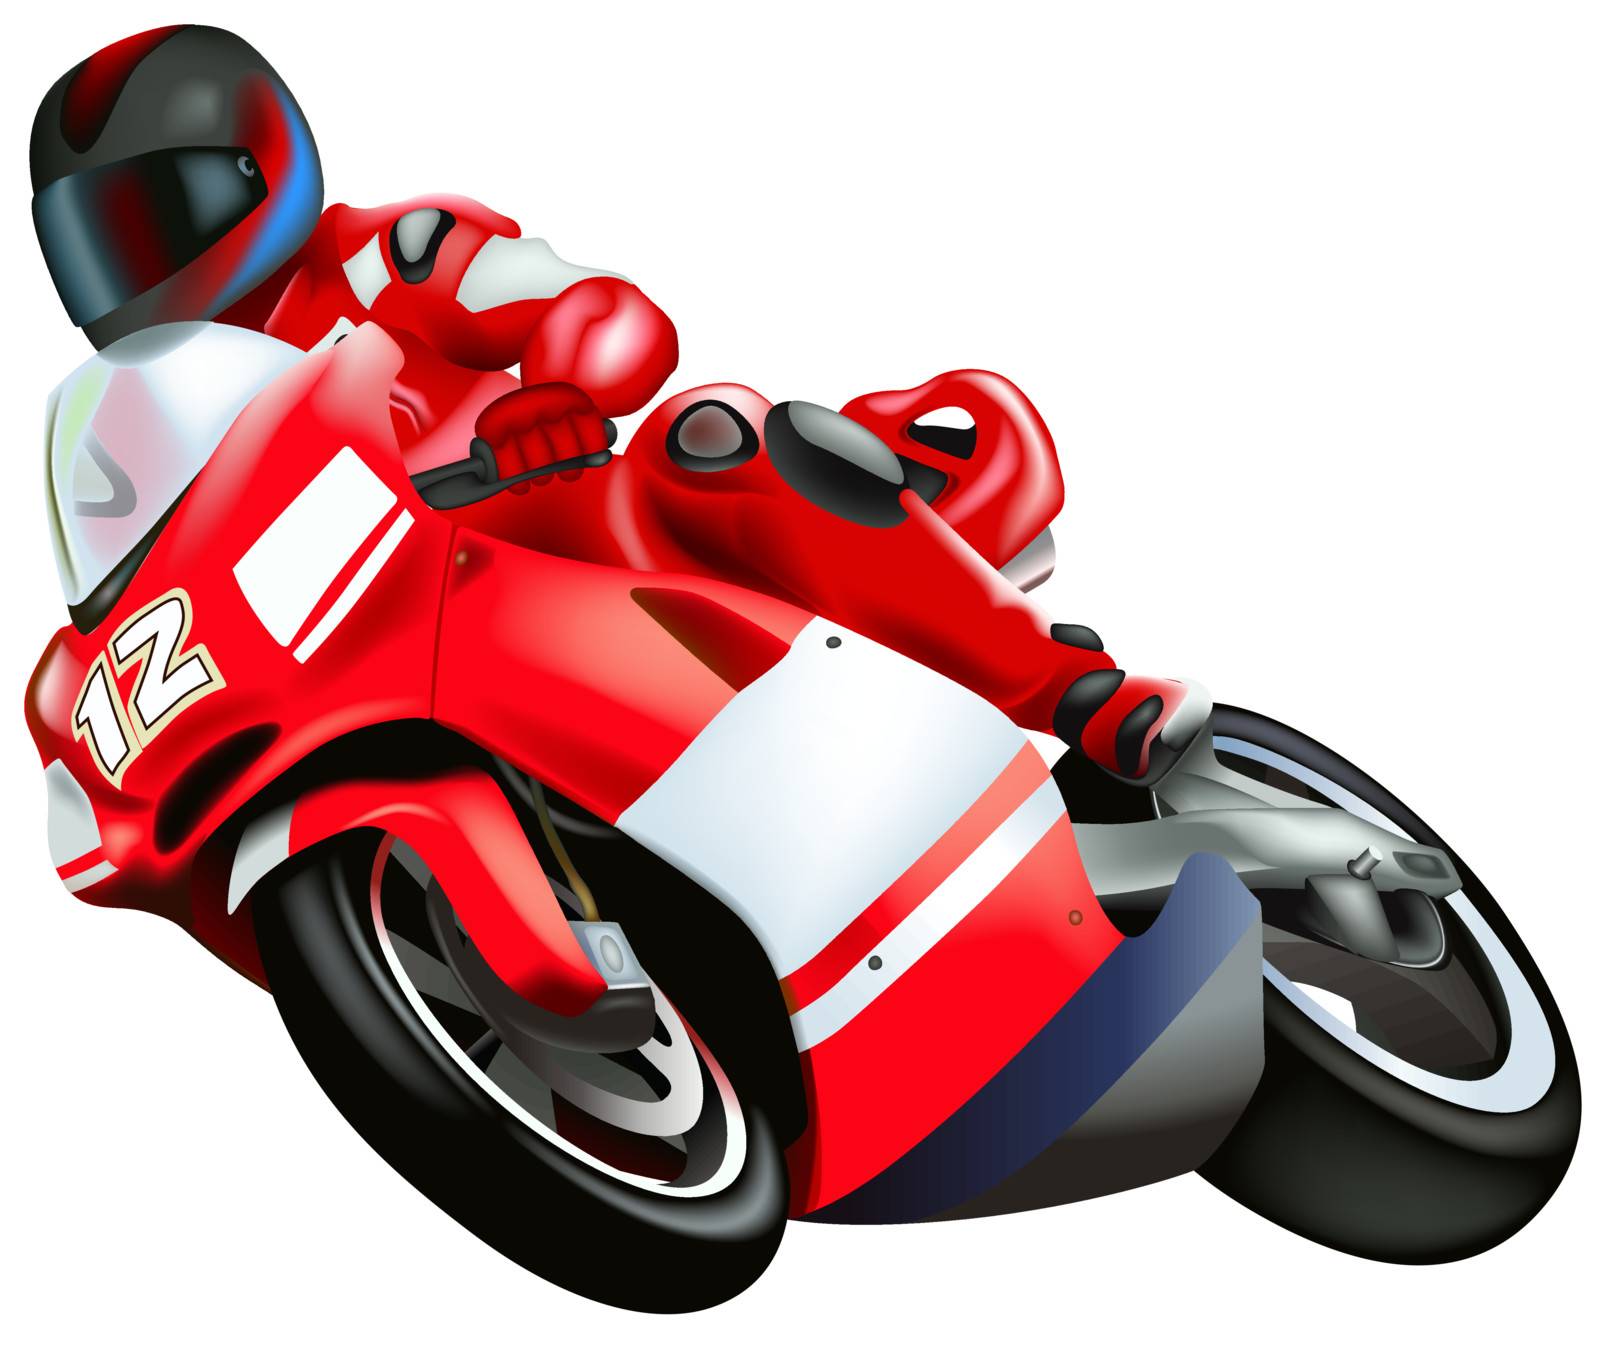 Motorcycle by illustratorCZ